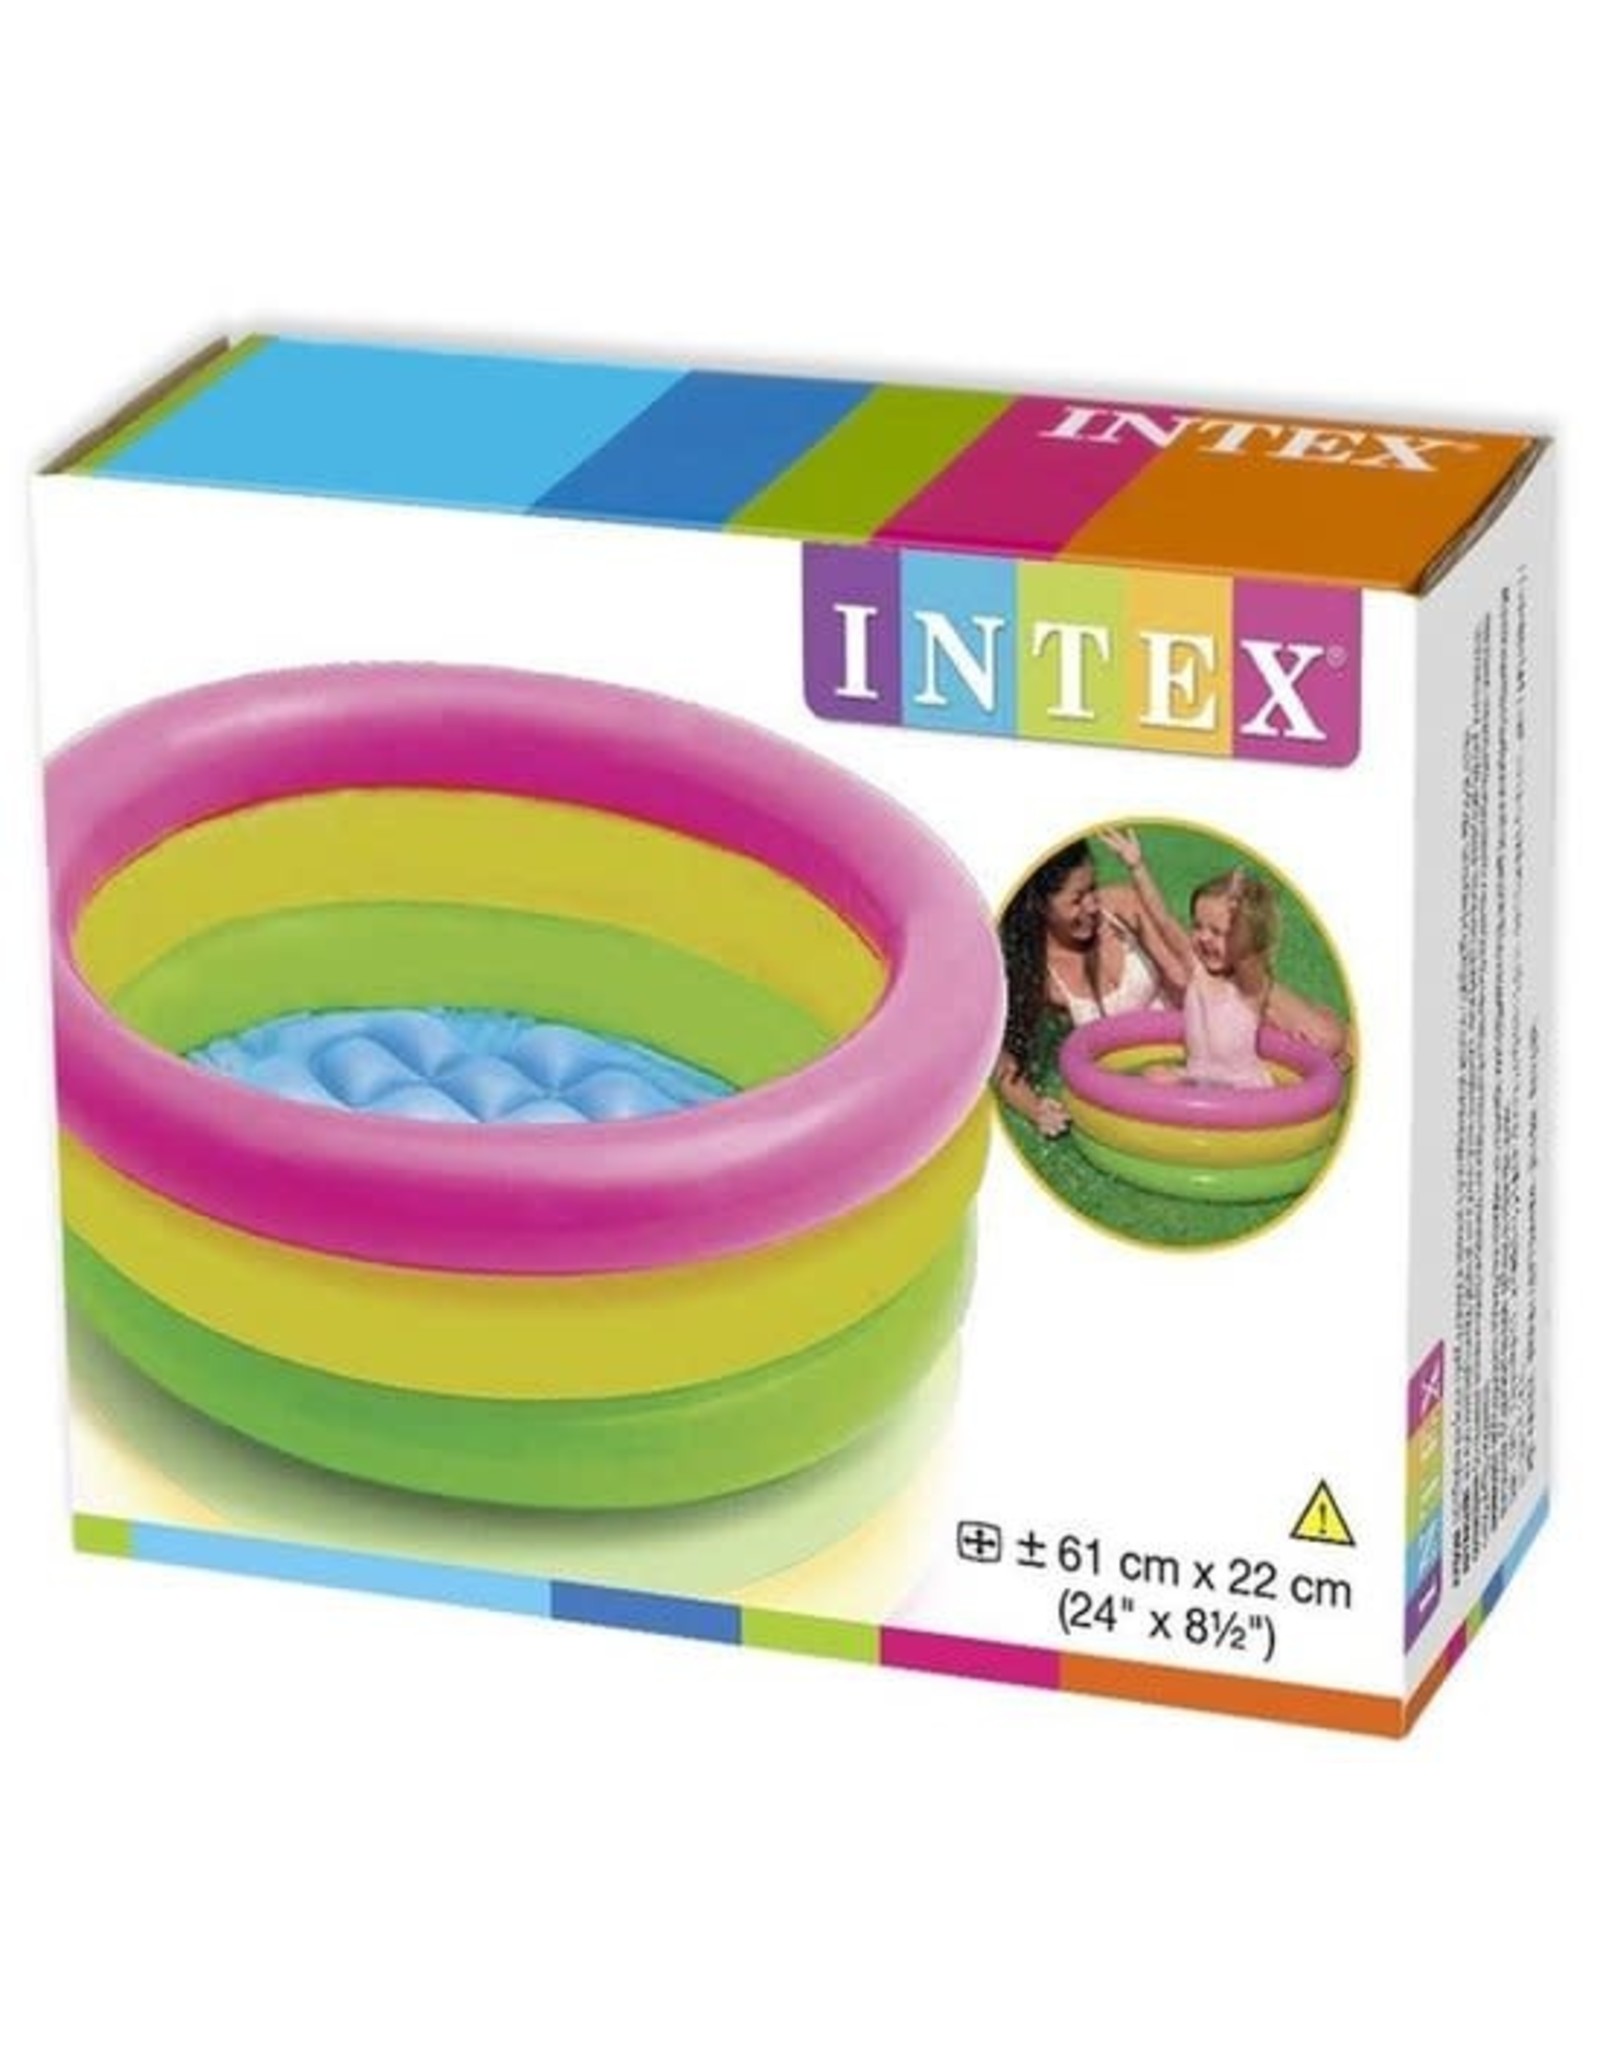 INTEX Intex Zwembad Sunset Glow 3-ring - Ø 61 x 22 cm - Rond